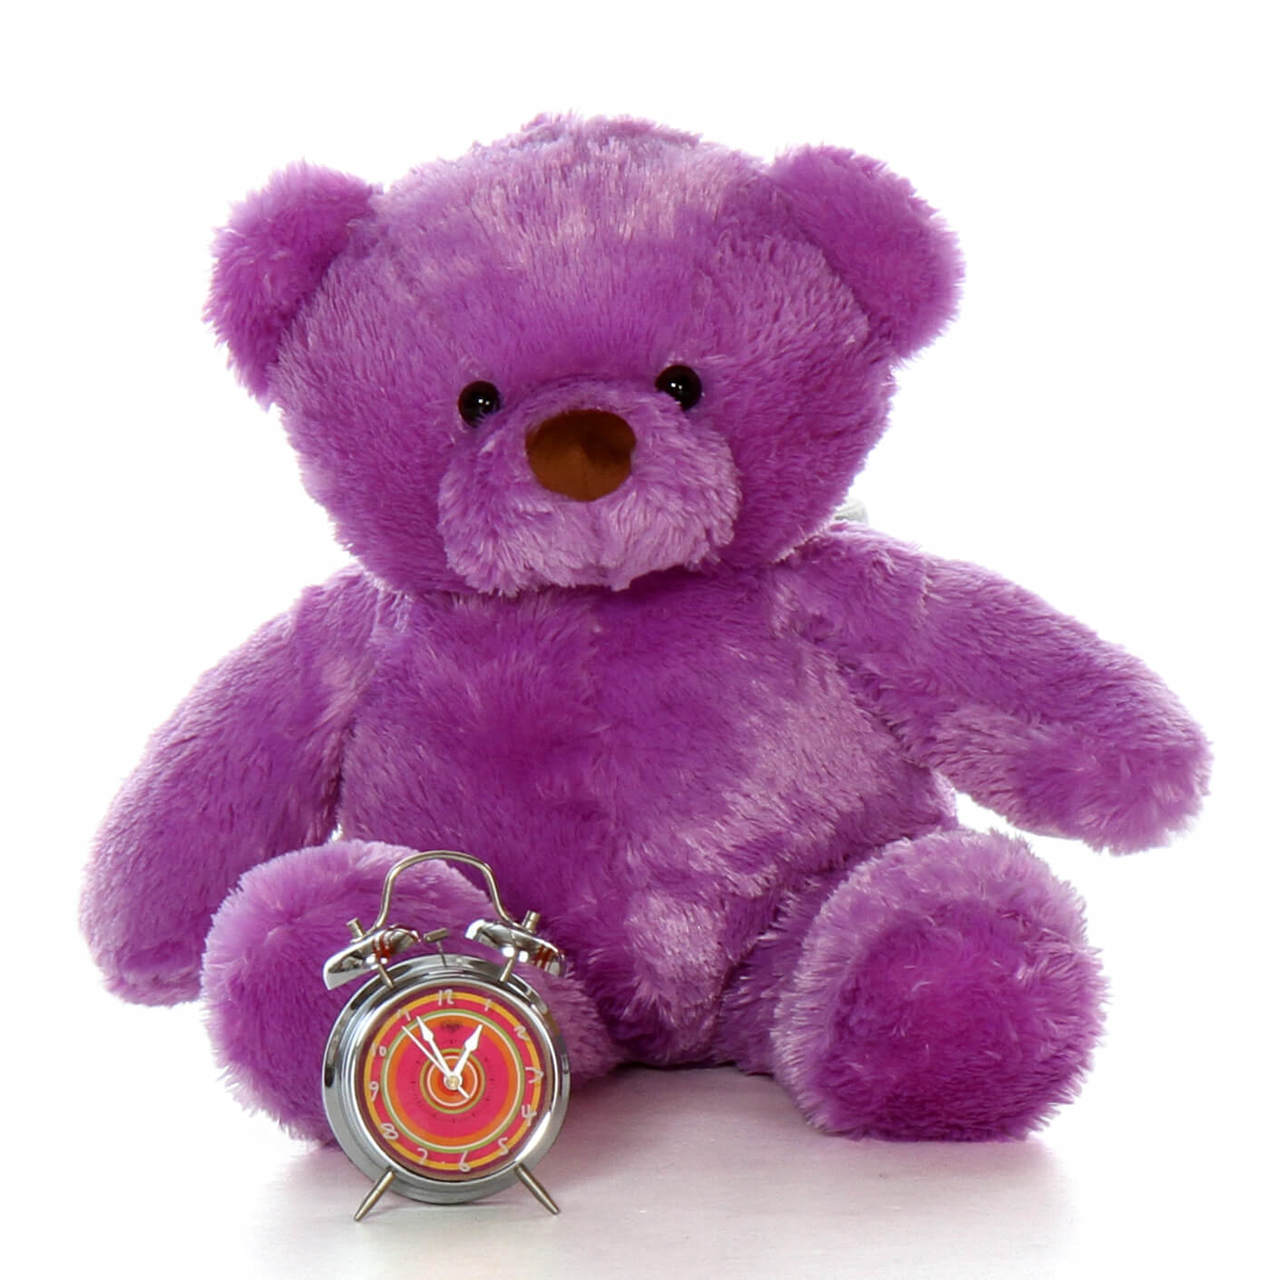 giant purple teddy bear